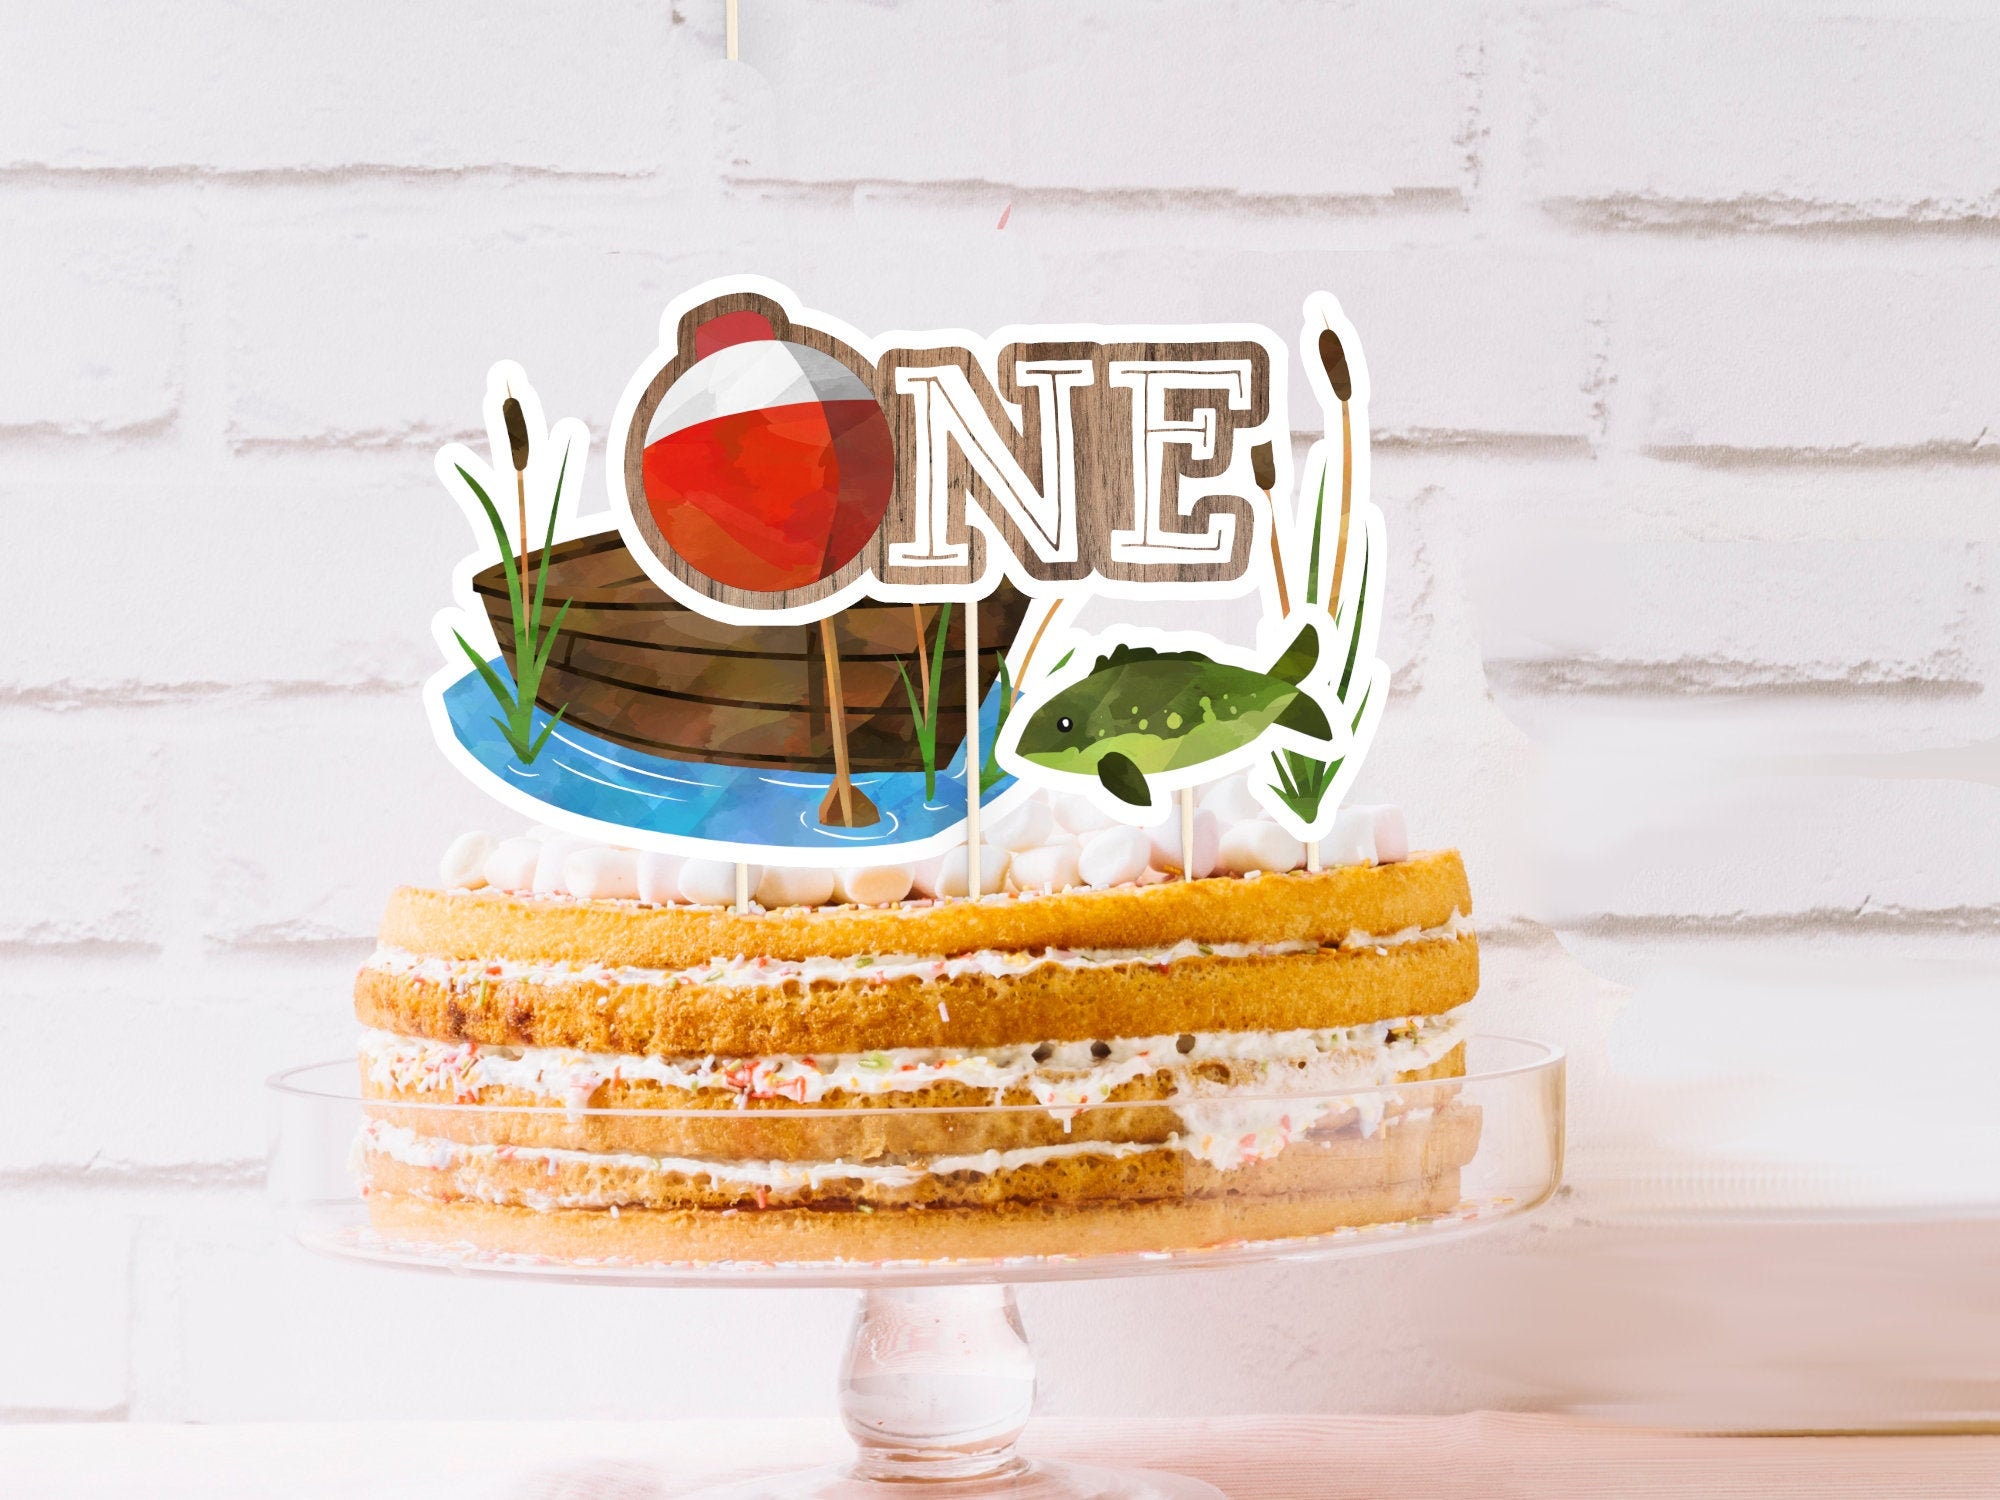 The Big One Fishing Birthday Party Theme Cake Bunting Cupcake